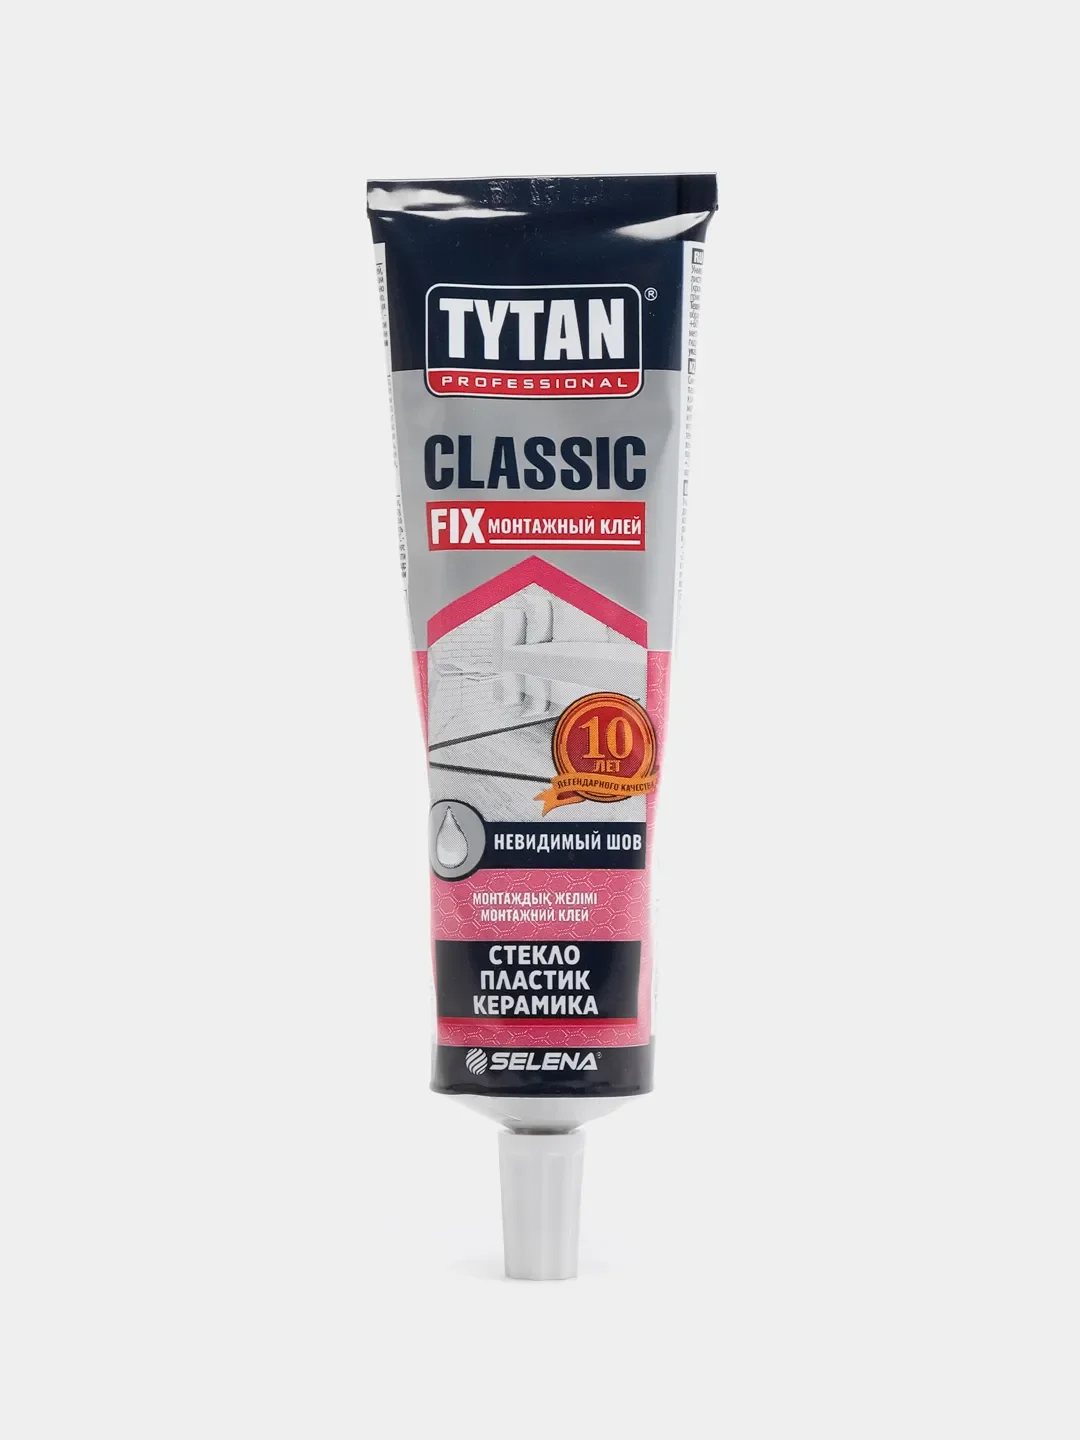 Tytan classic fix прозрачный